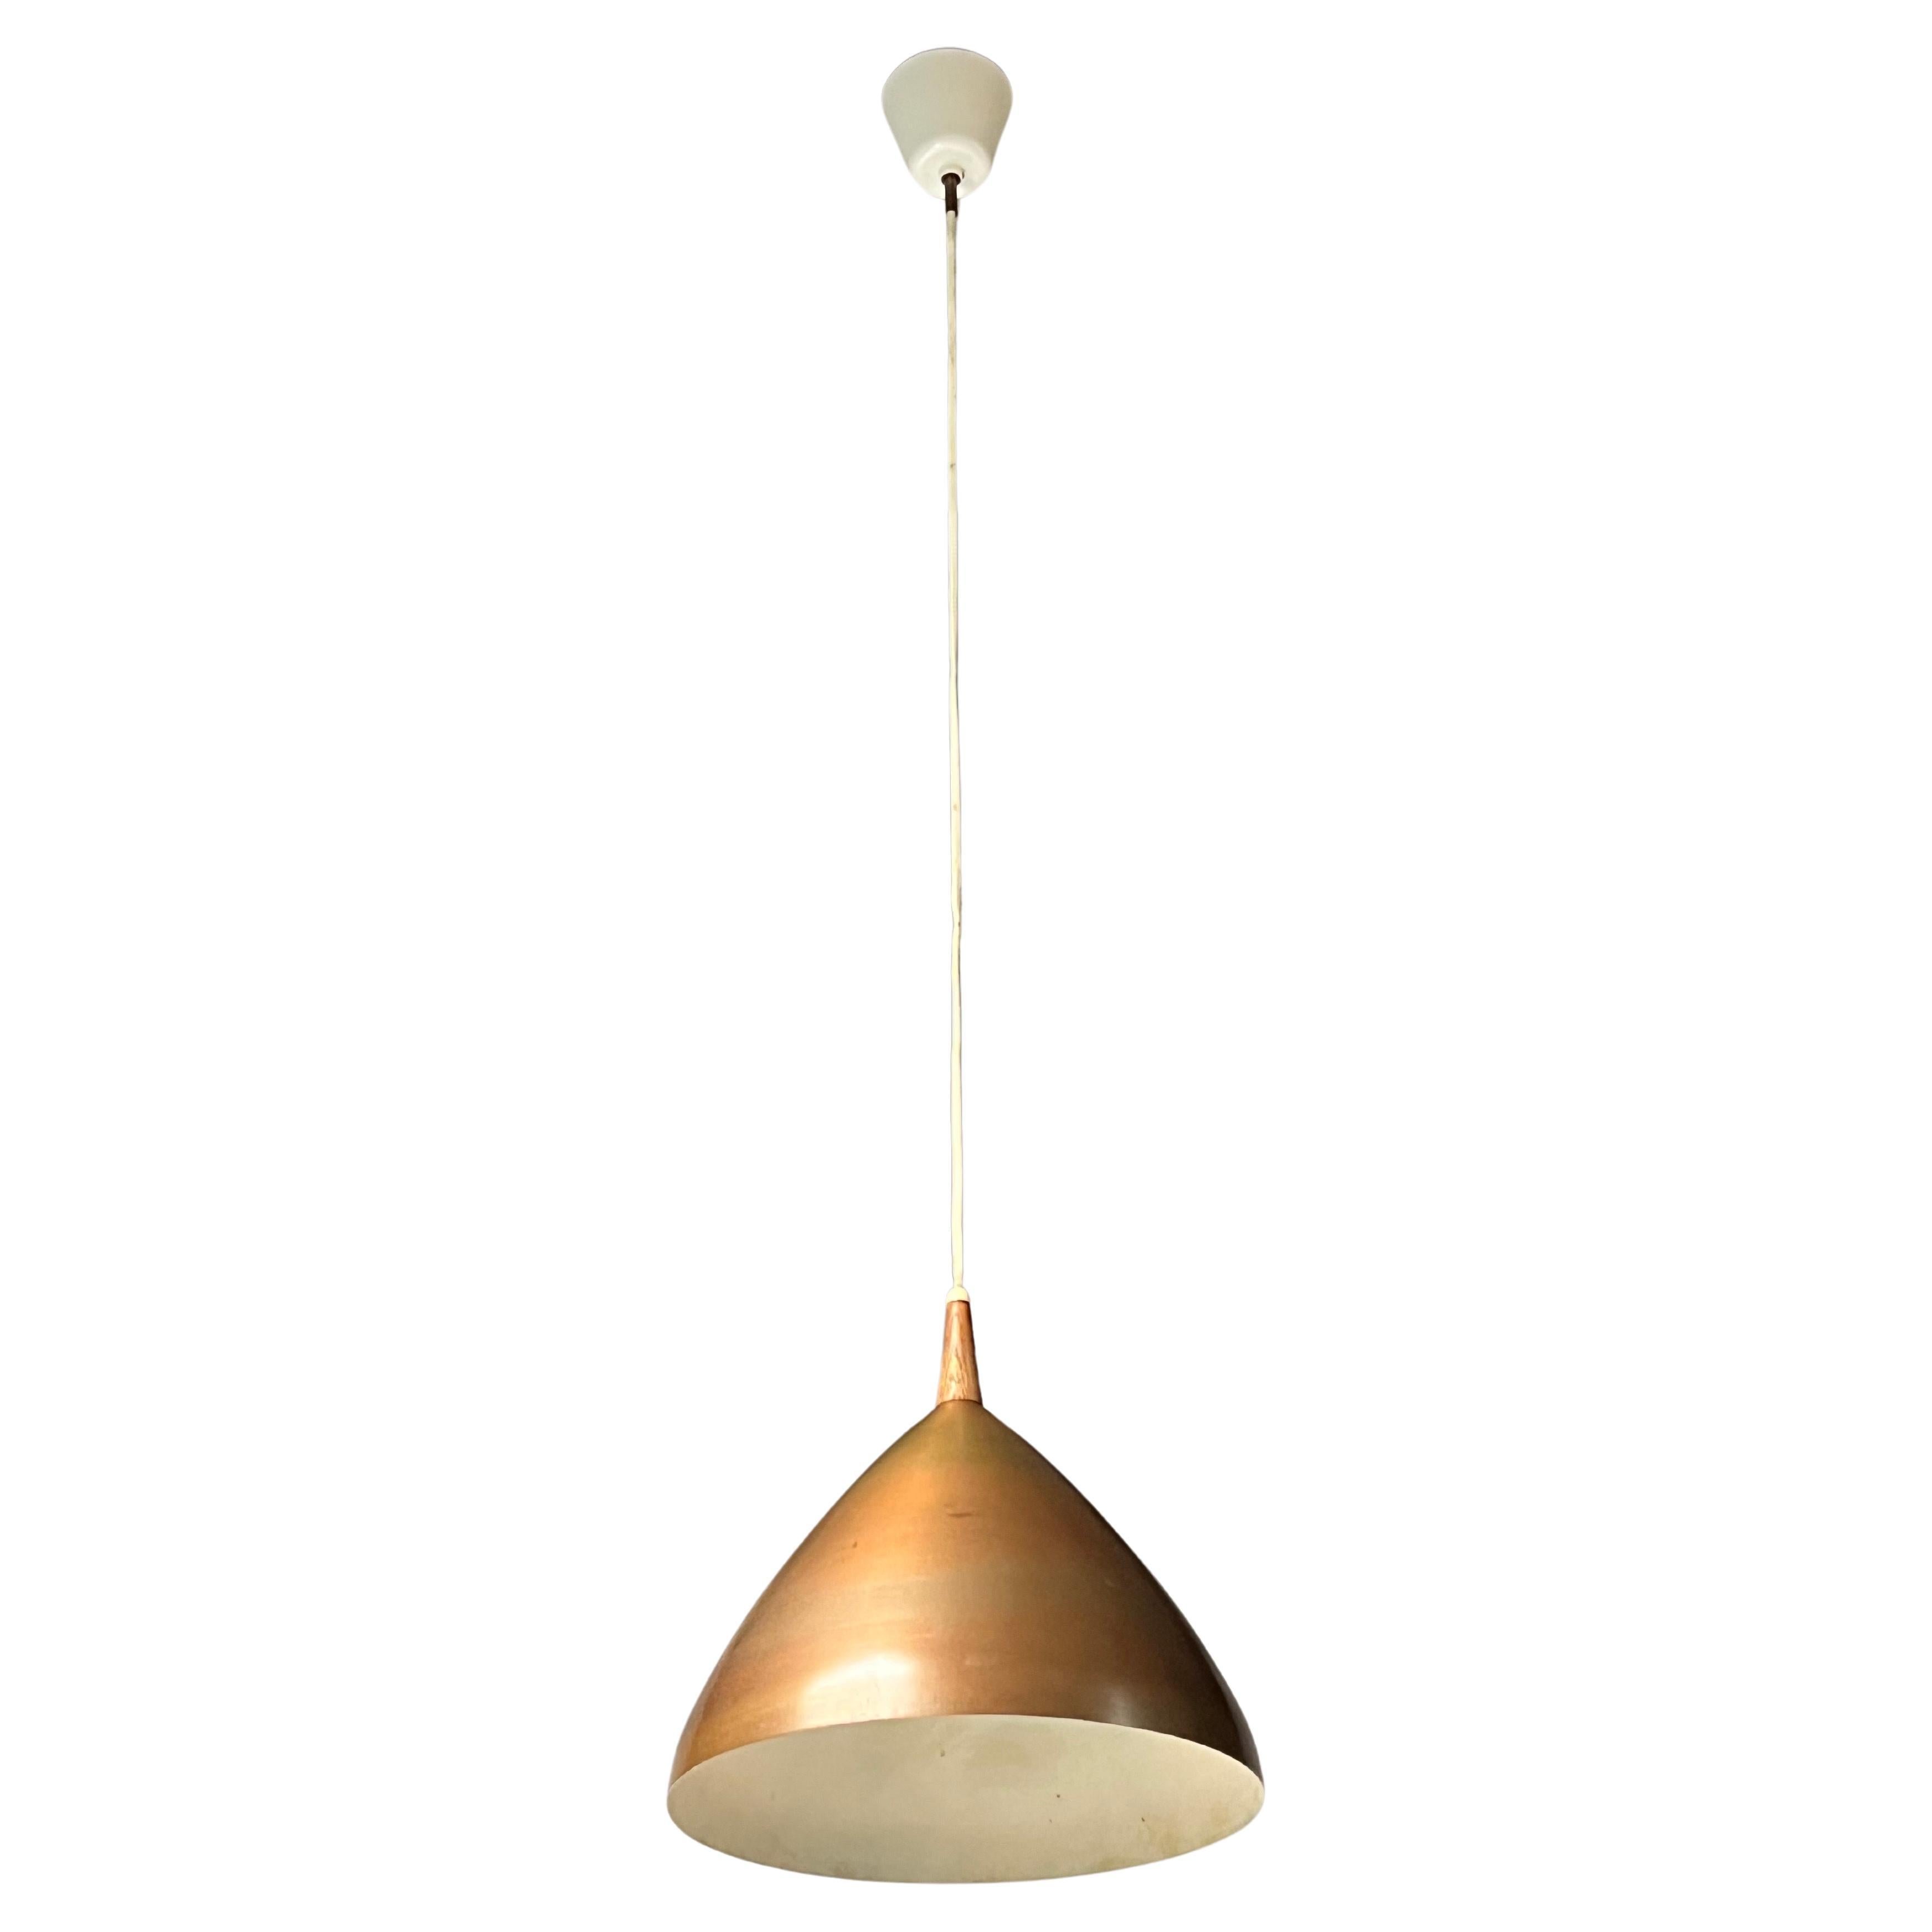 Hans Agne Jakobsson Copper suspension Lamp, Midcentury from Sweden 1950's For Sale